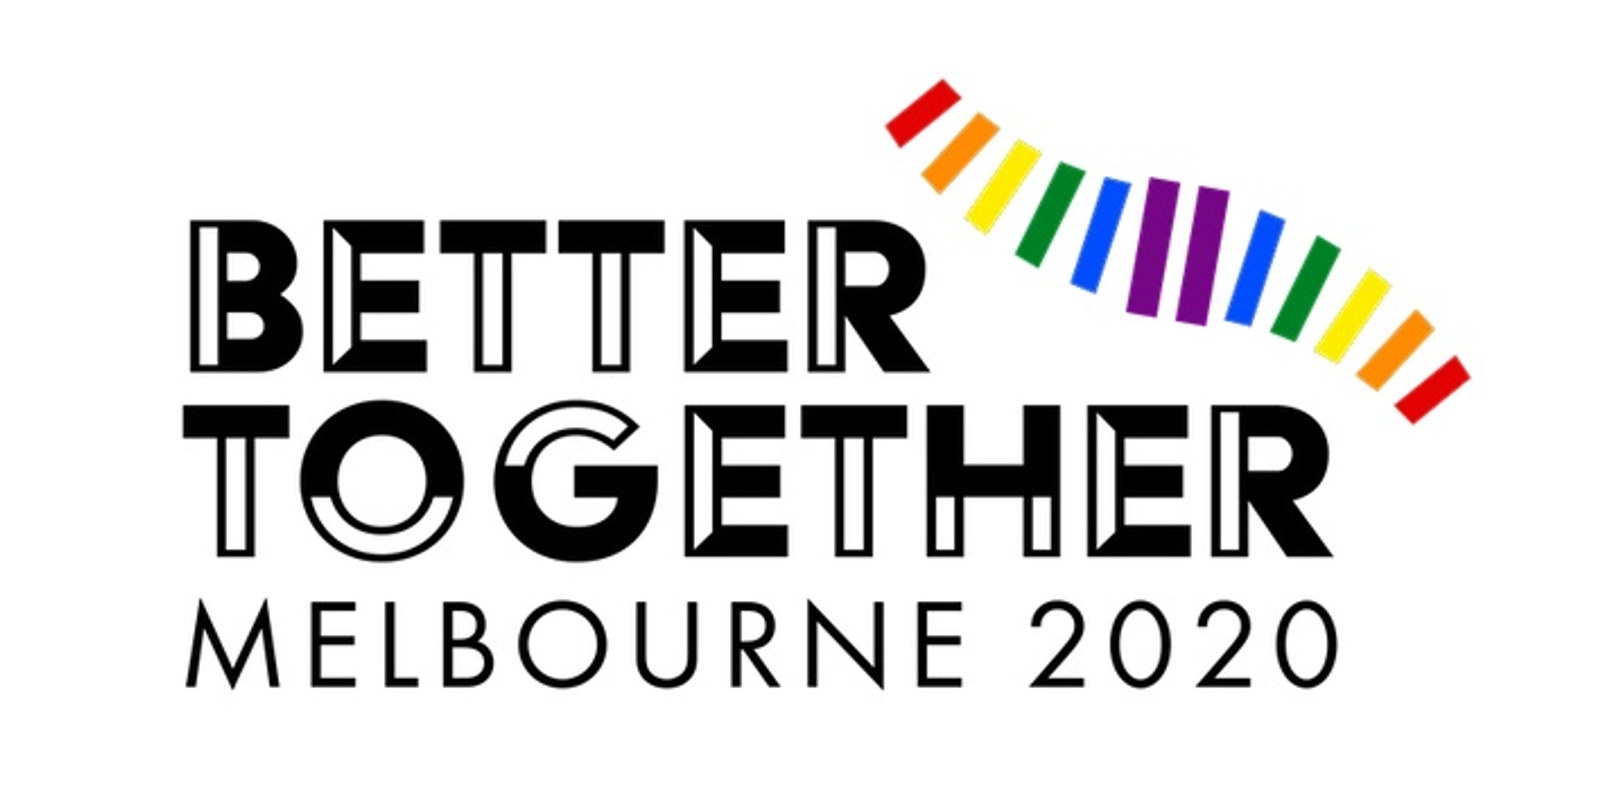 Banner image for Better Together 2020 National LGBTIQ+ Conference